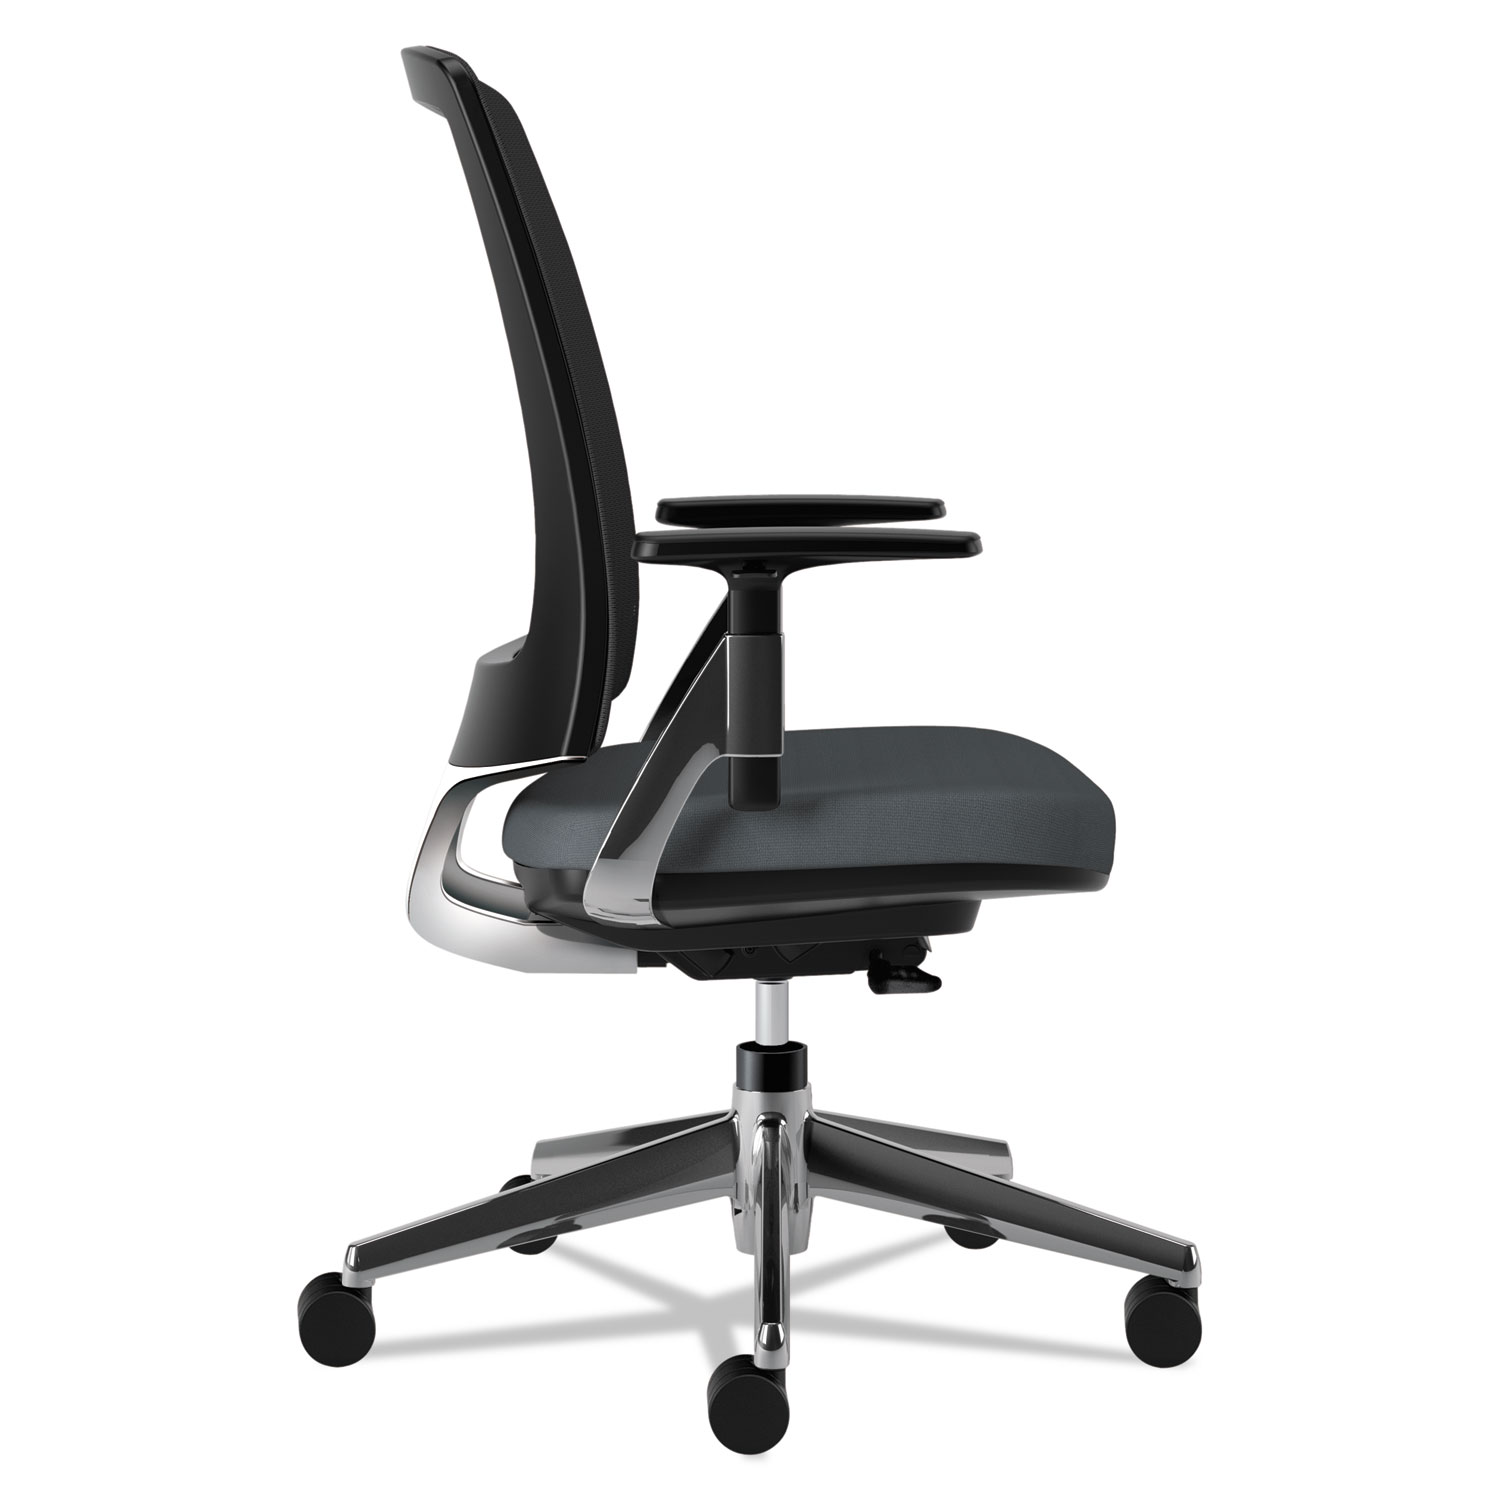 Lota Series Mesh Mid-Back Work Chair, Charcoal Fabric, Polished Aluminum Base